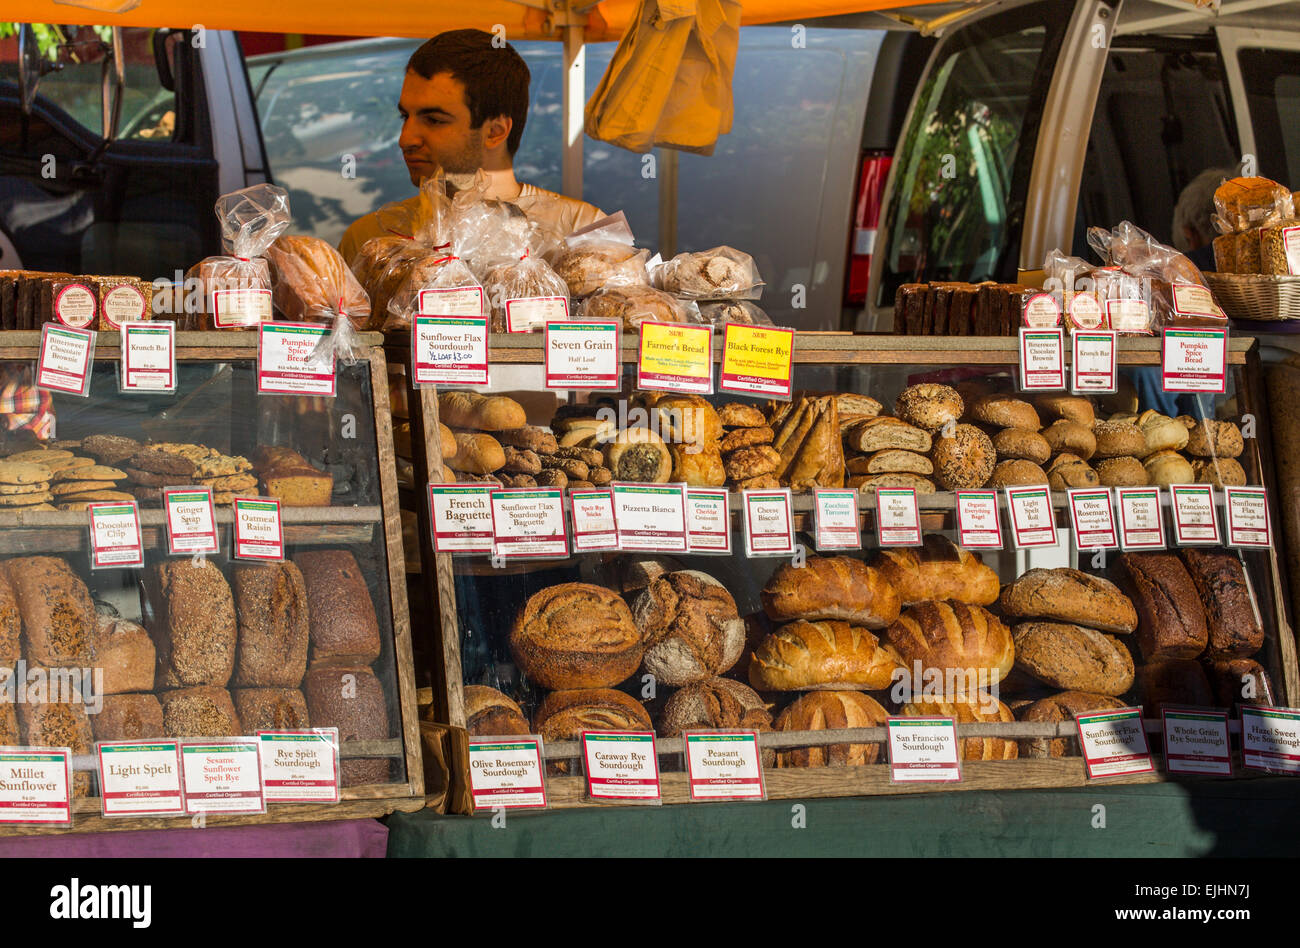 Bread stall at Union Square Market, New York, USA Stock Photo